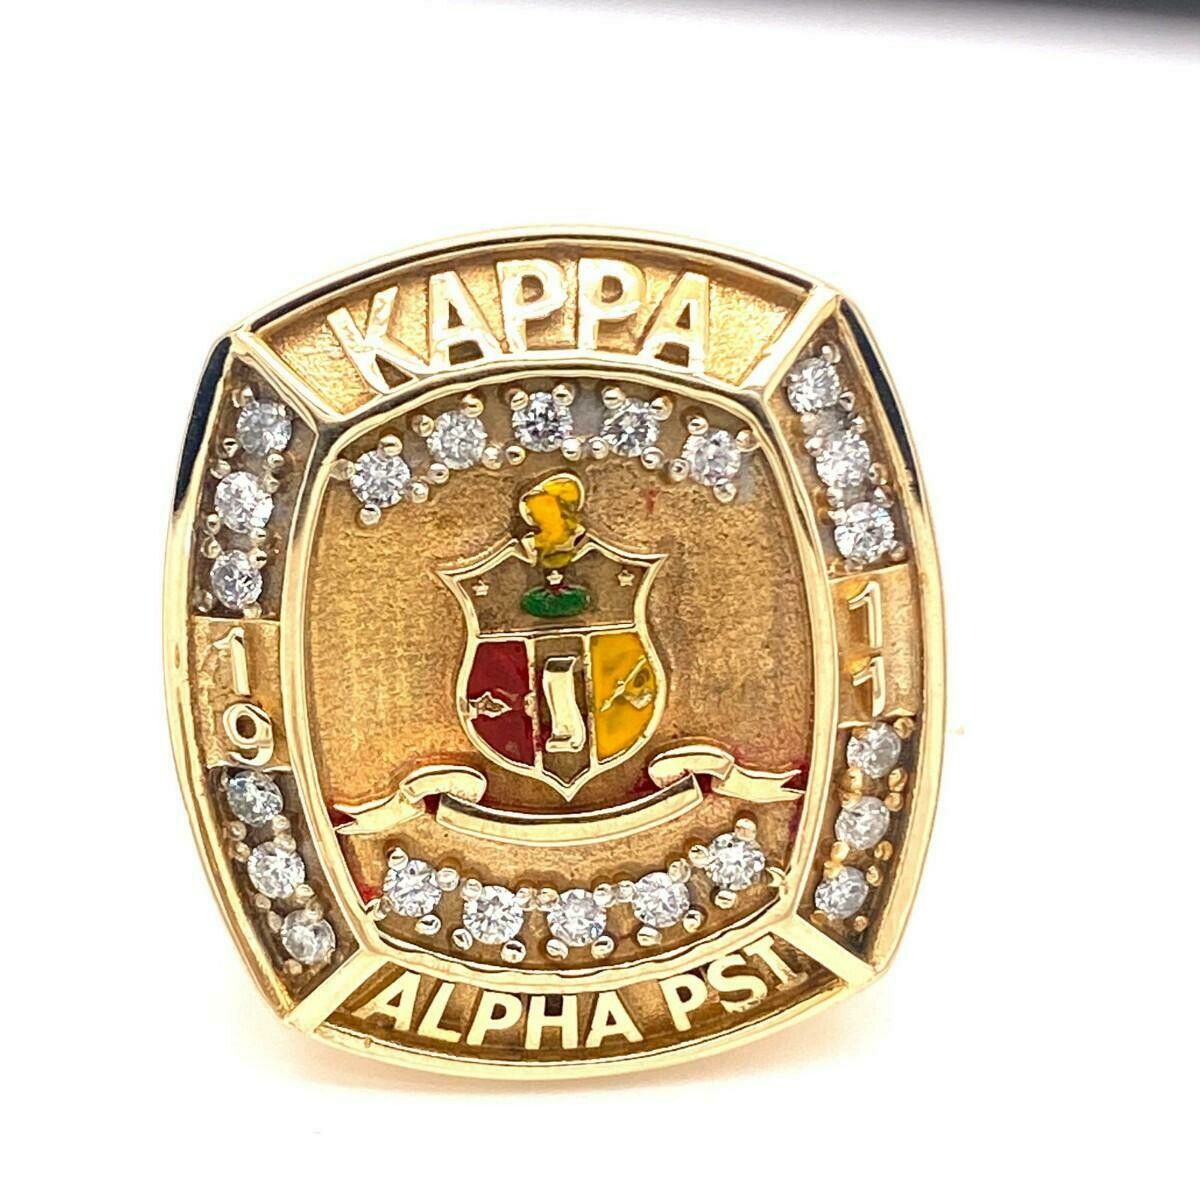 KAPPA ALPHA PSI SHIELD GOLD DIAMOND RING